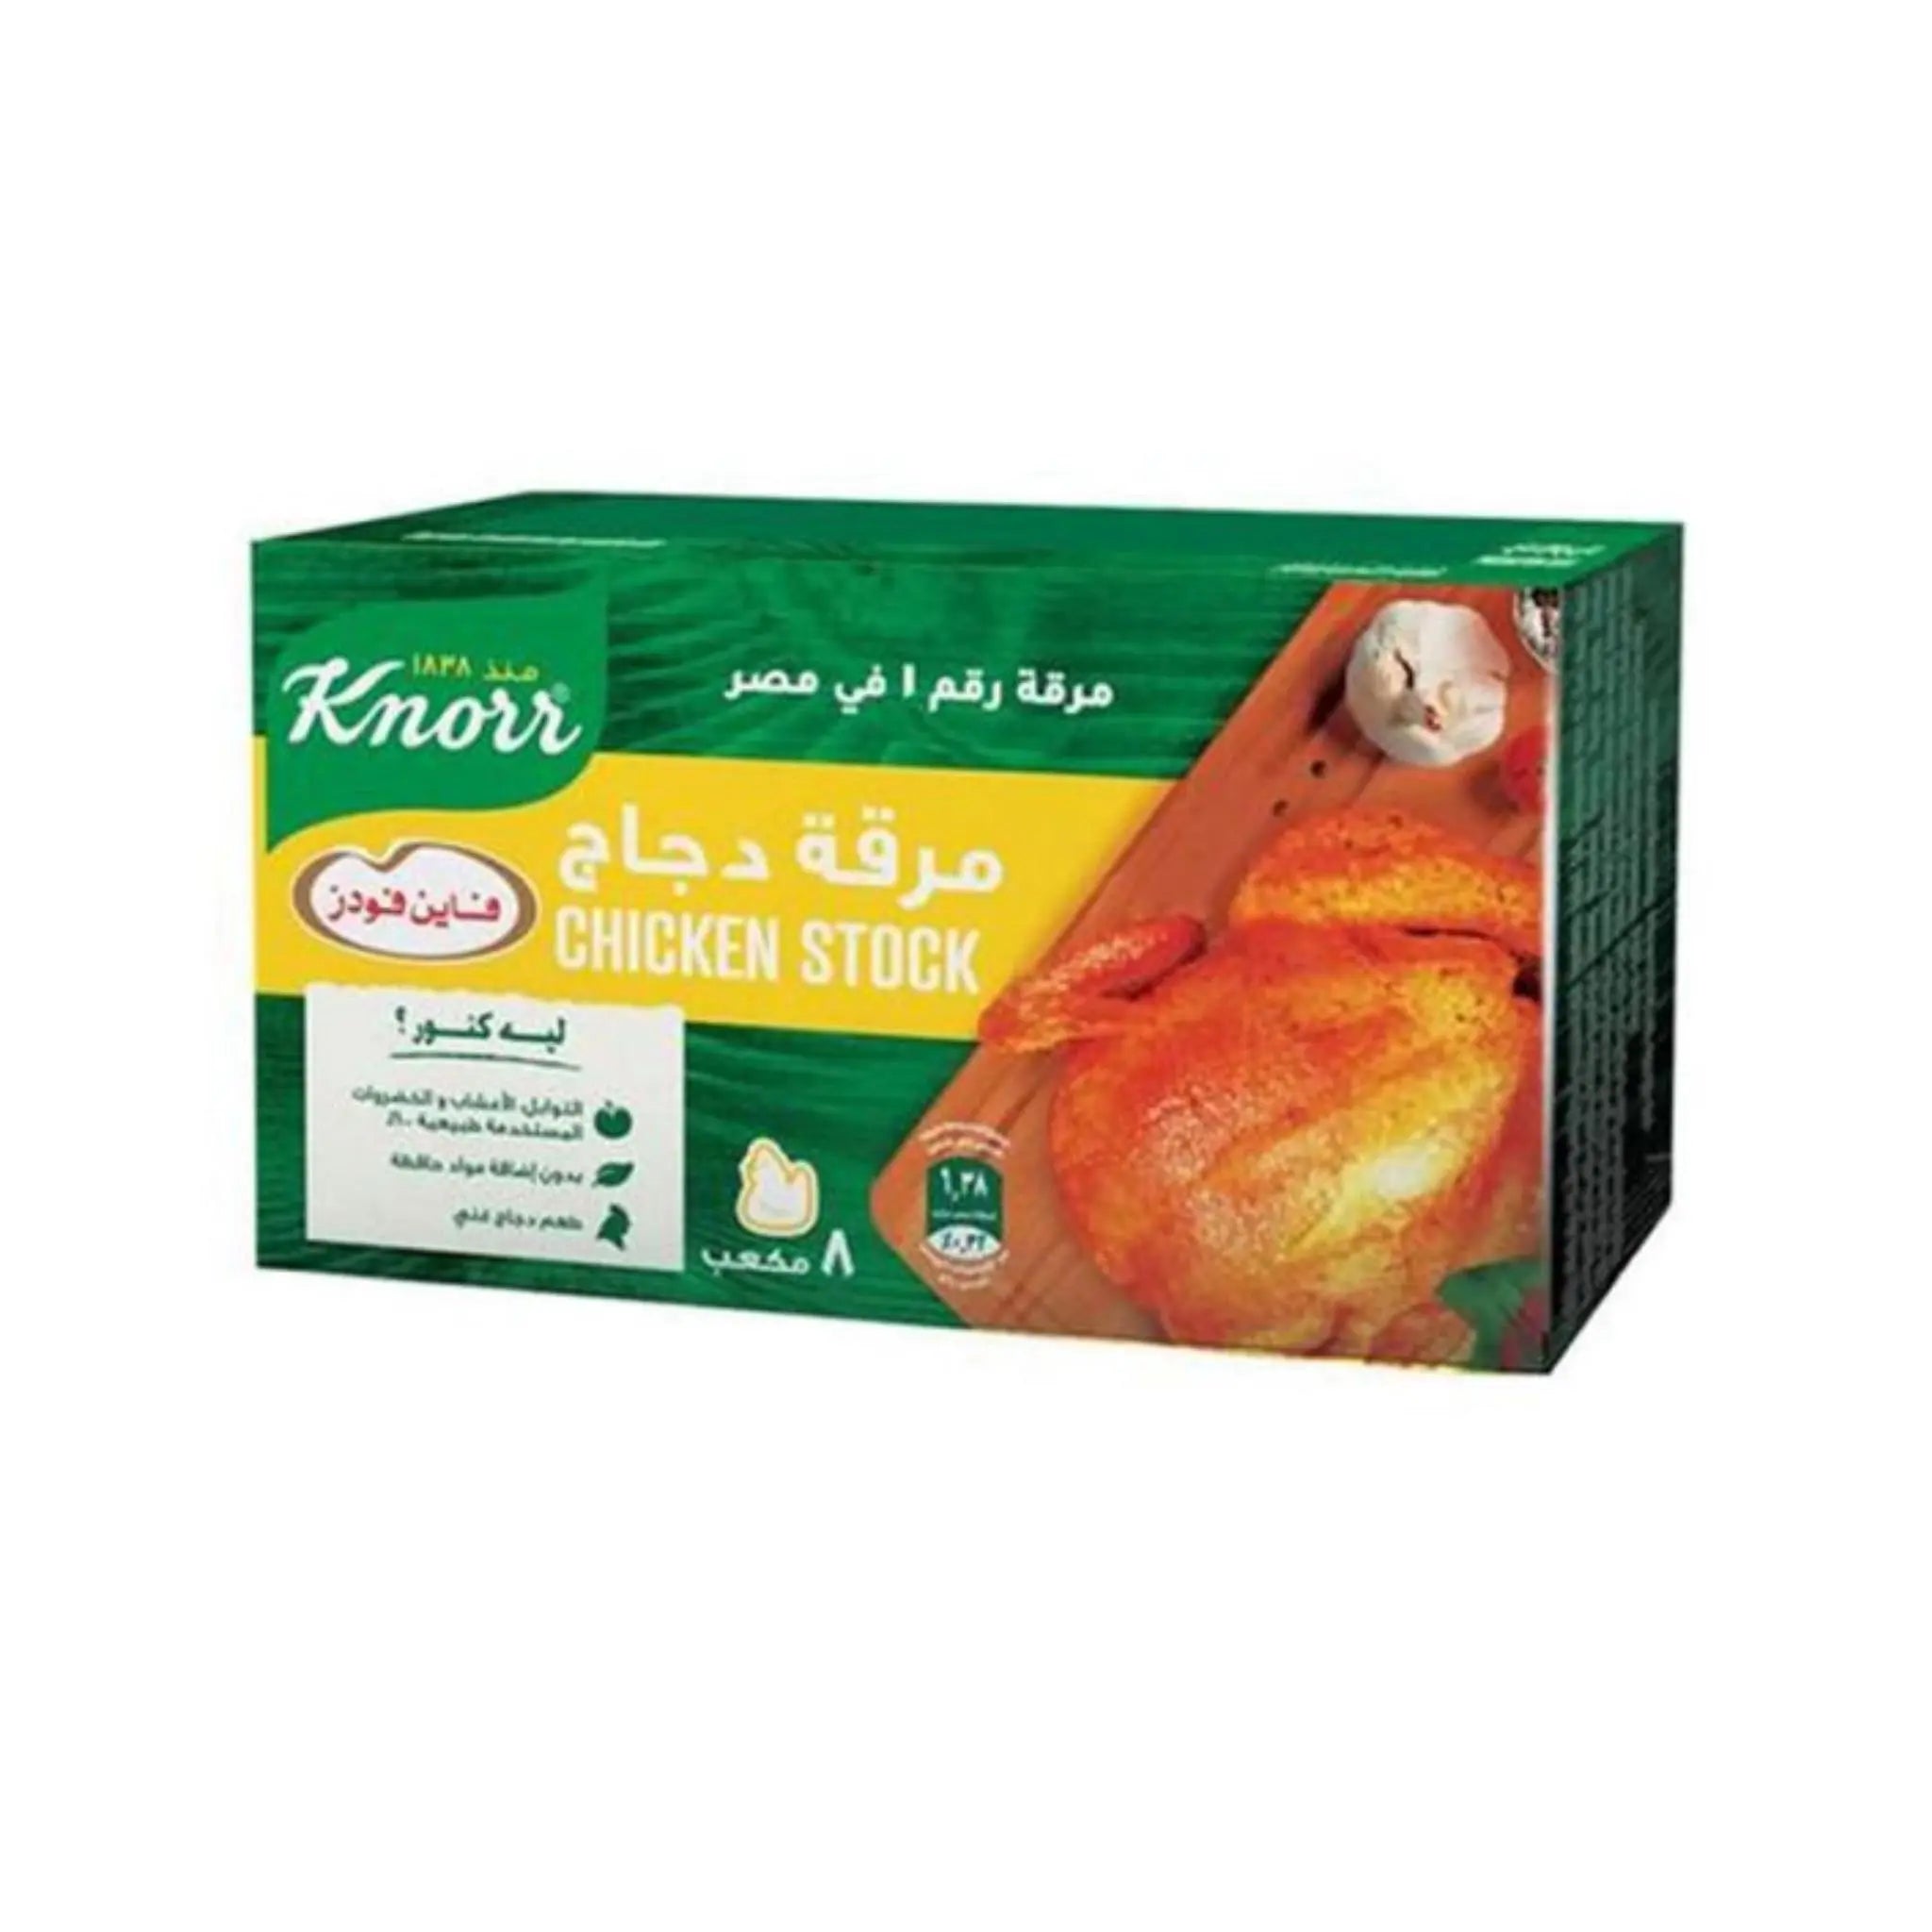 Knorr Chicken Stock Cubes - 6 x 120 cubes x 8g (1 carton) - Marino.AE